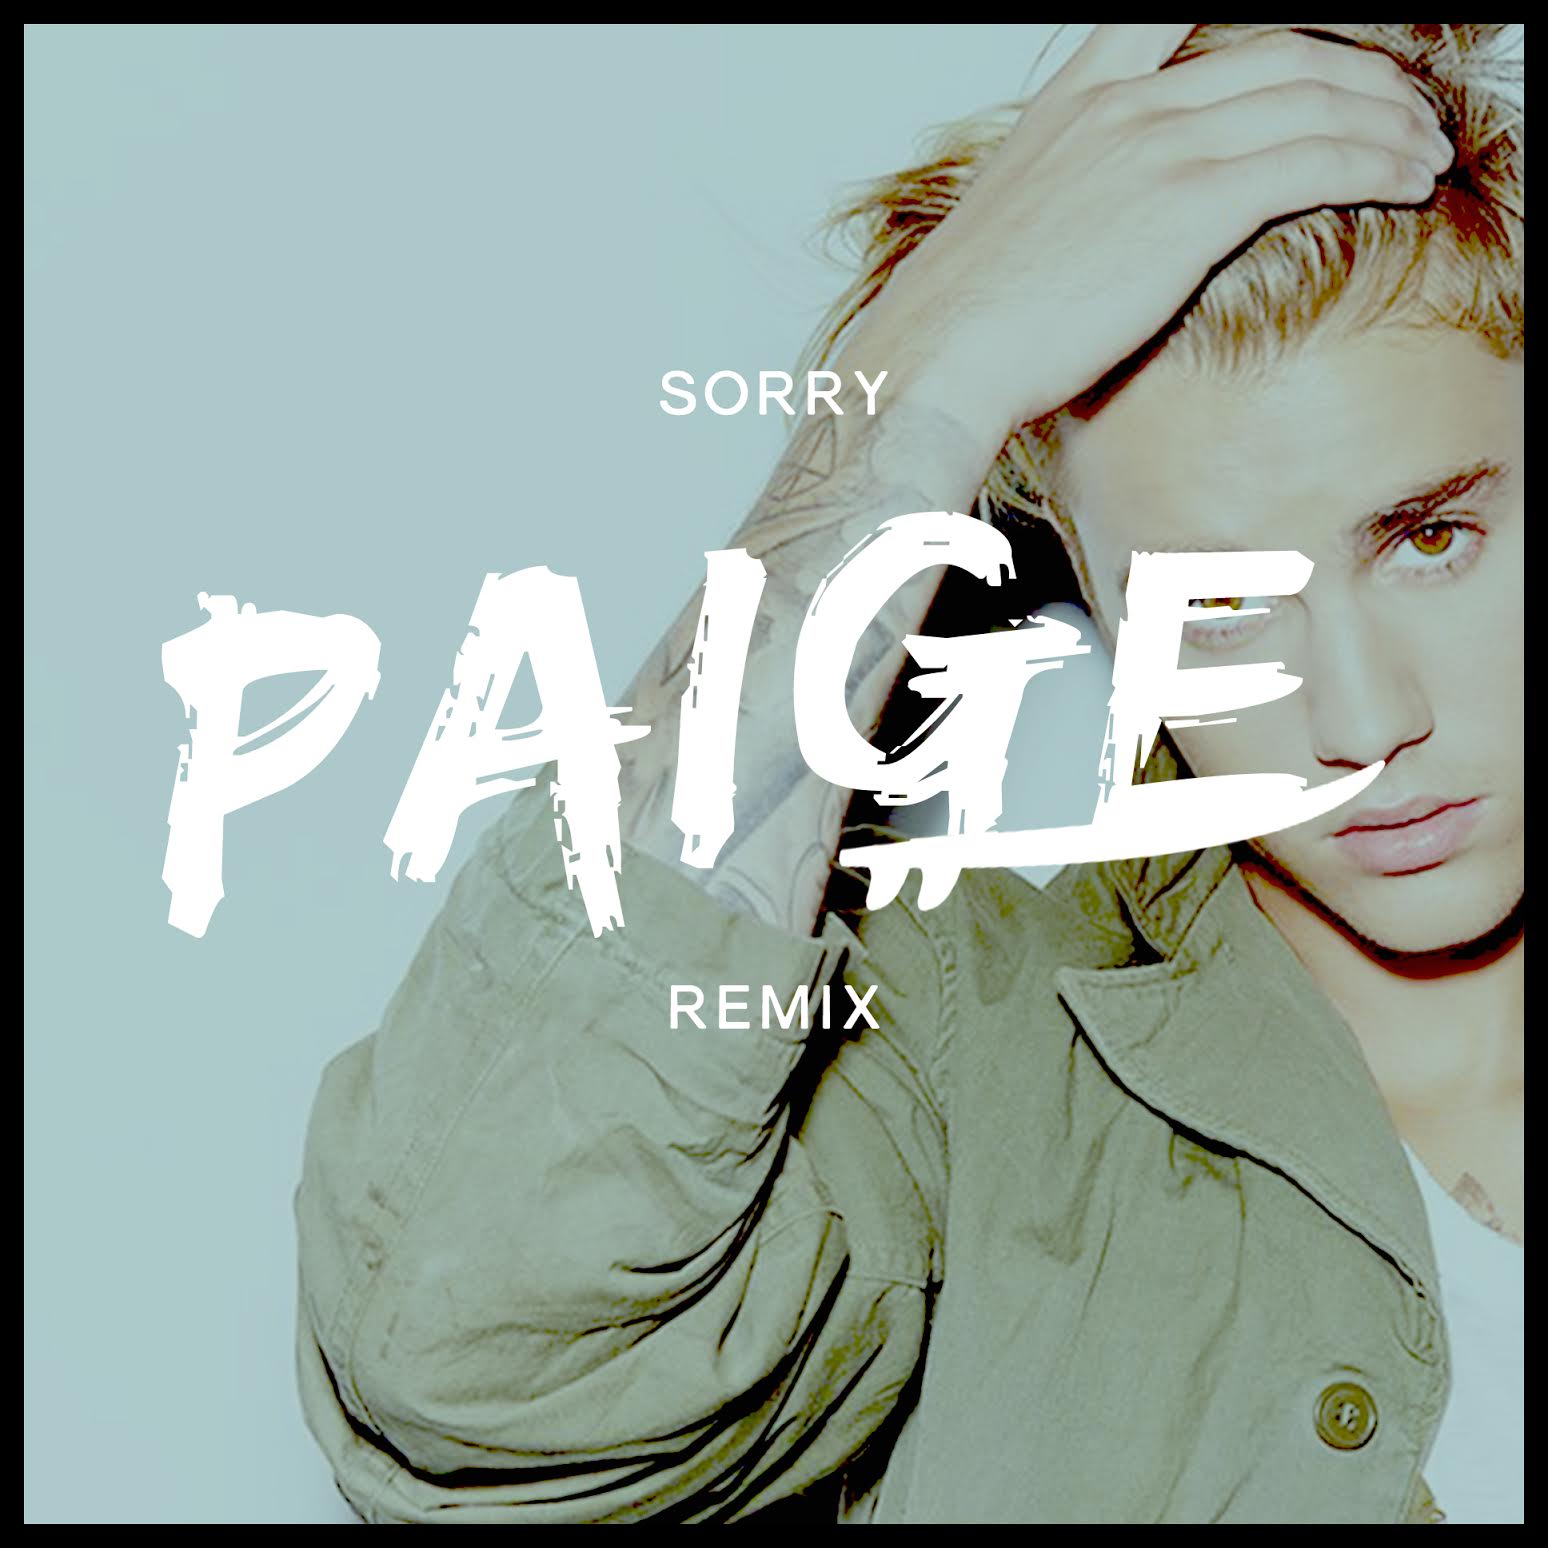 jb-sorry-paige remix